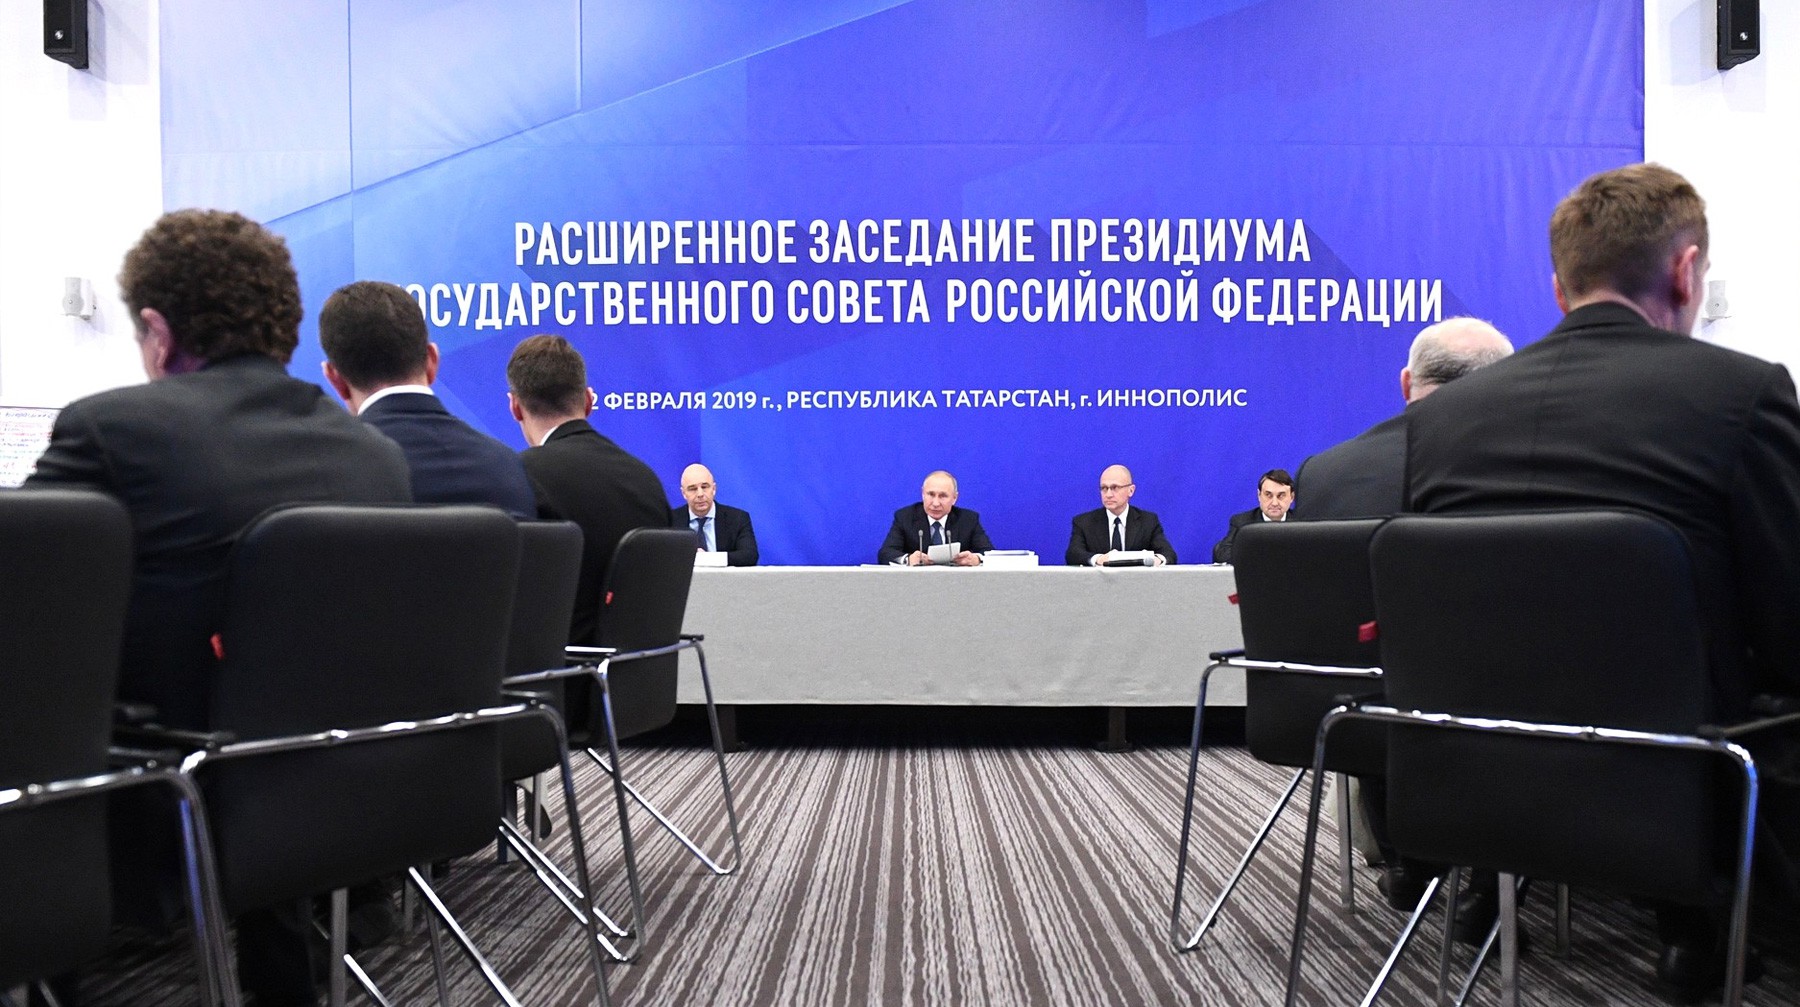 Dailystorm - Путин «потерял» Минниханова на заседании президиума Госсовета